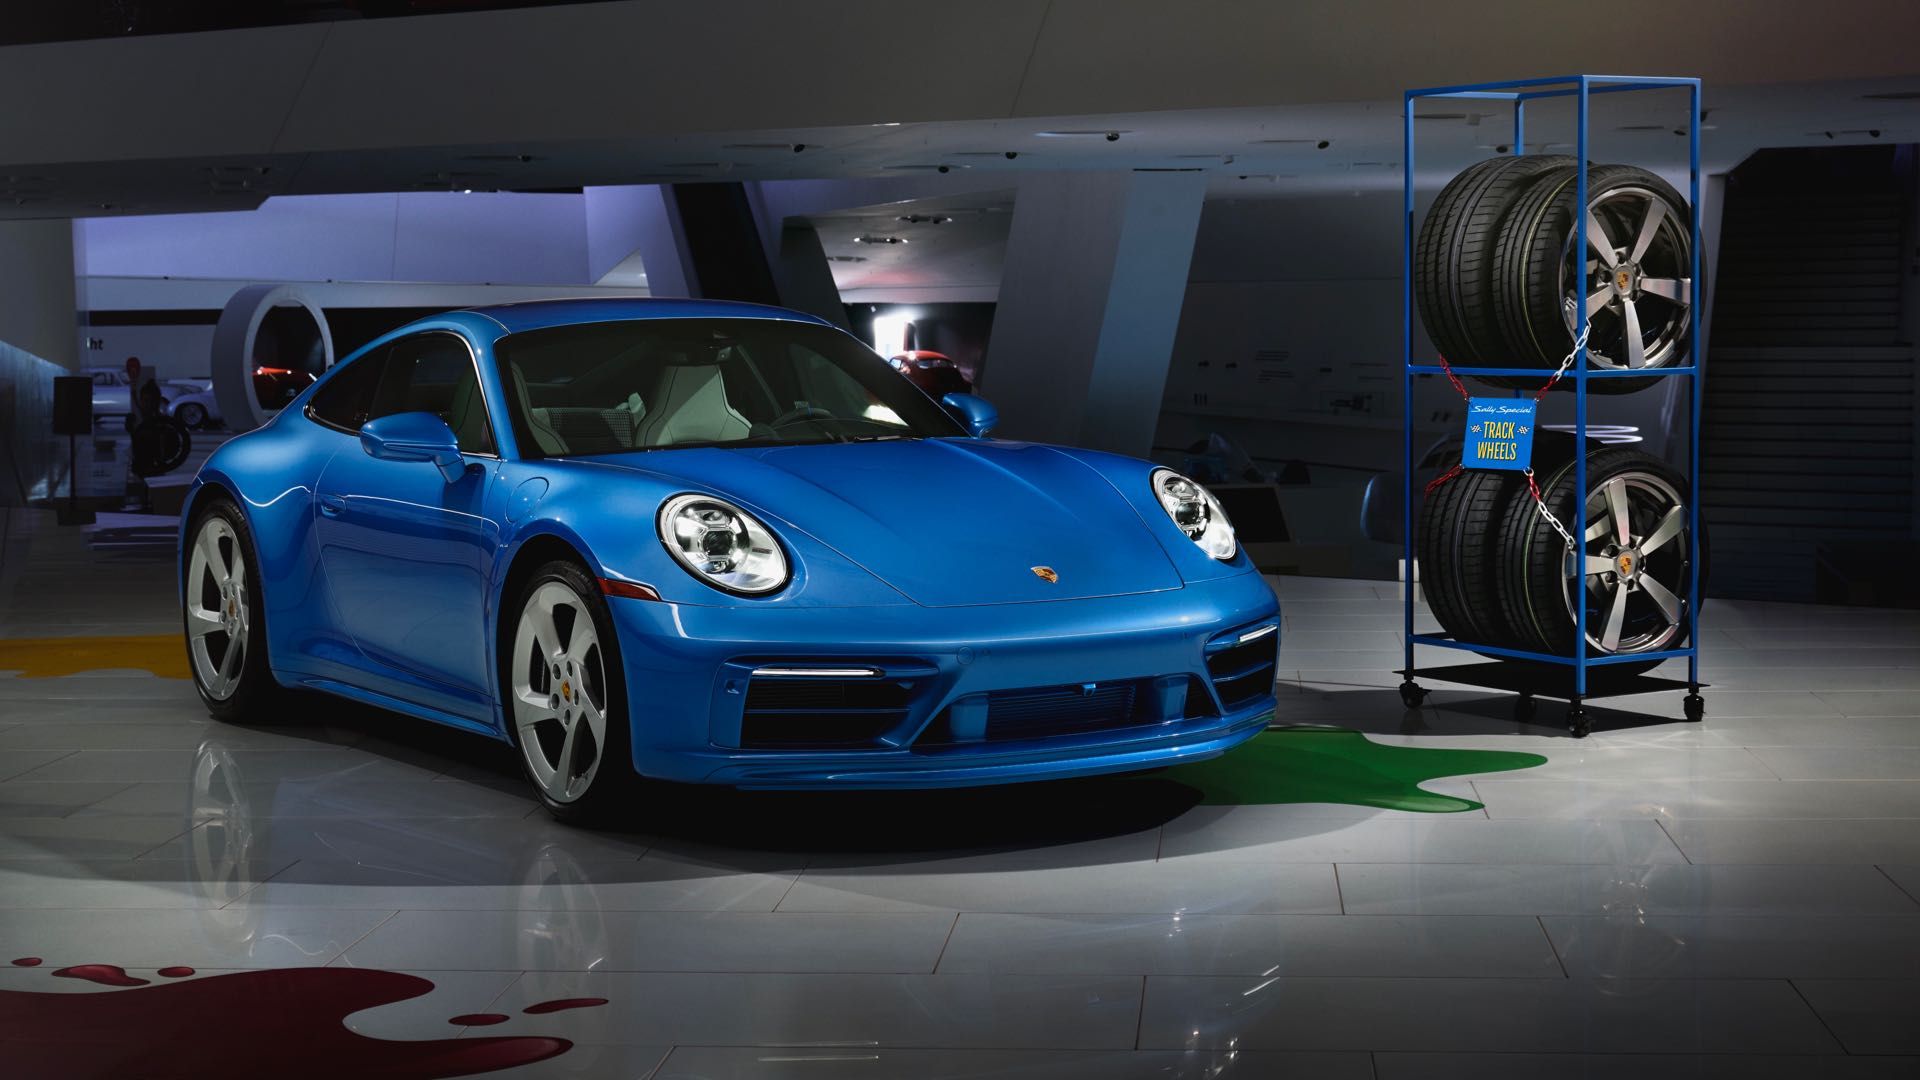 Porsche-911-Sally-Special-Pixar-Cars-2.jpg